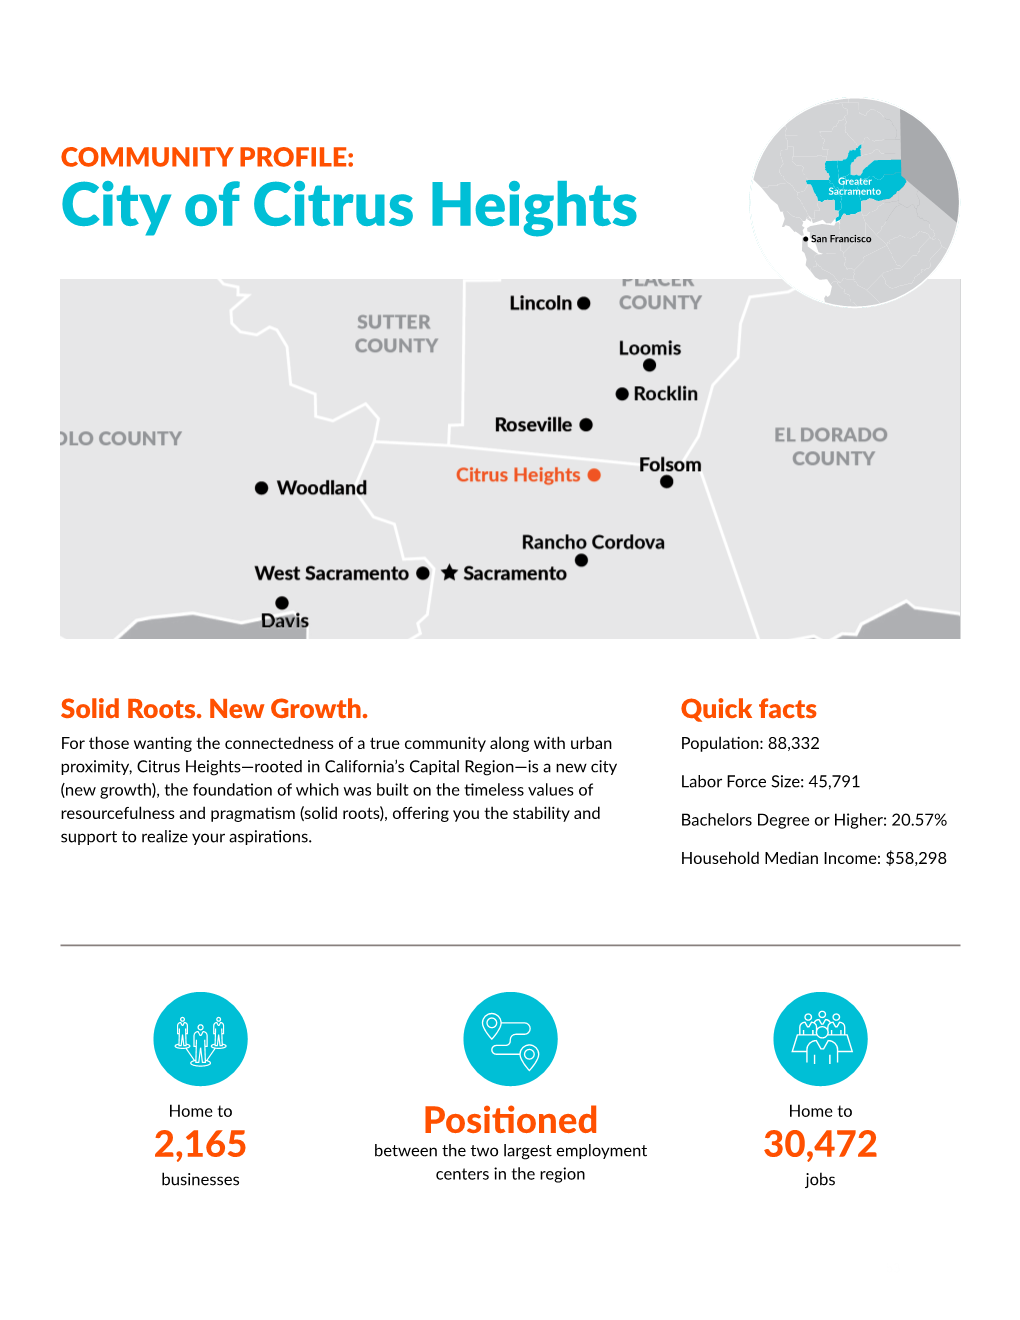 City of Citrus Heights Sacramento San Francisco